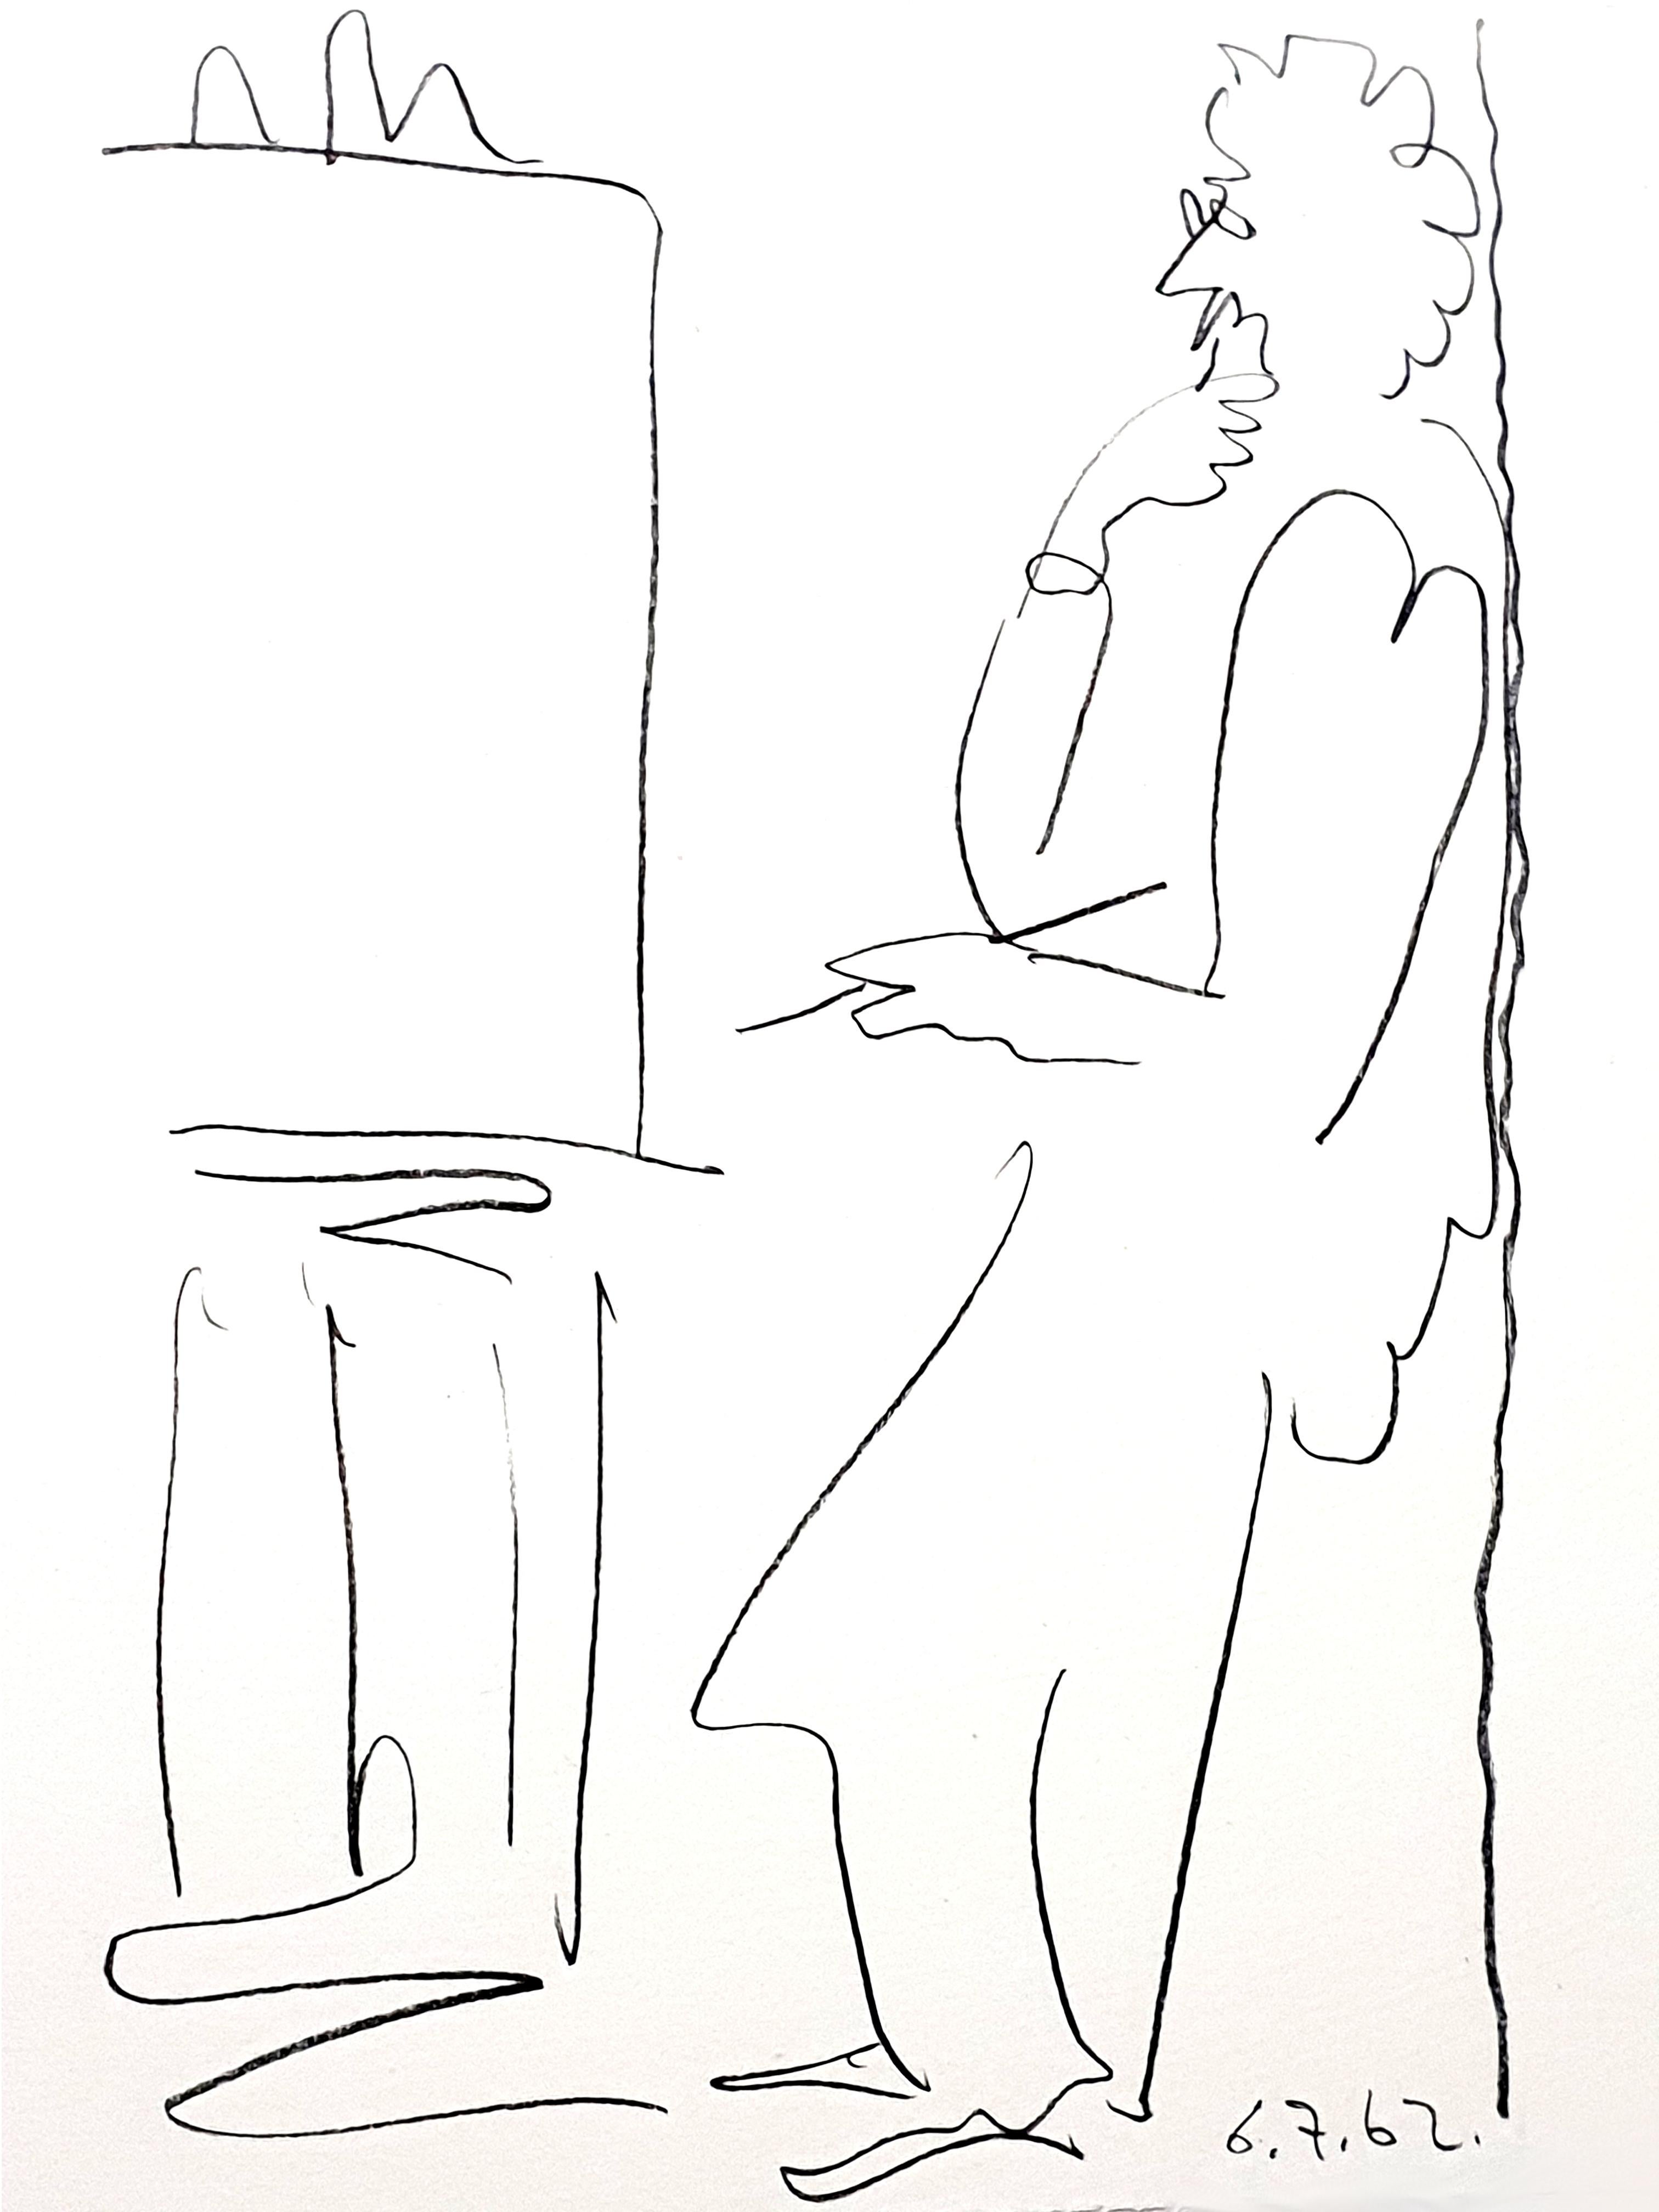 Pablo Picasso - Original Lithograph
Title: Painter and his Model
From the illustrated book "Regards sur Paris" (Paris: André Sauret, 1962)
Edition of 180
Individual prints were not signed
Dimensions: 39 x 30 cm
1962
References: Mourlot 353, Bloch